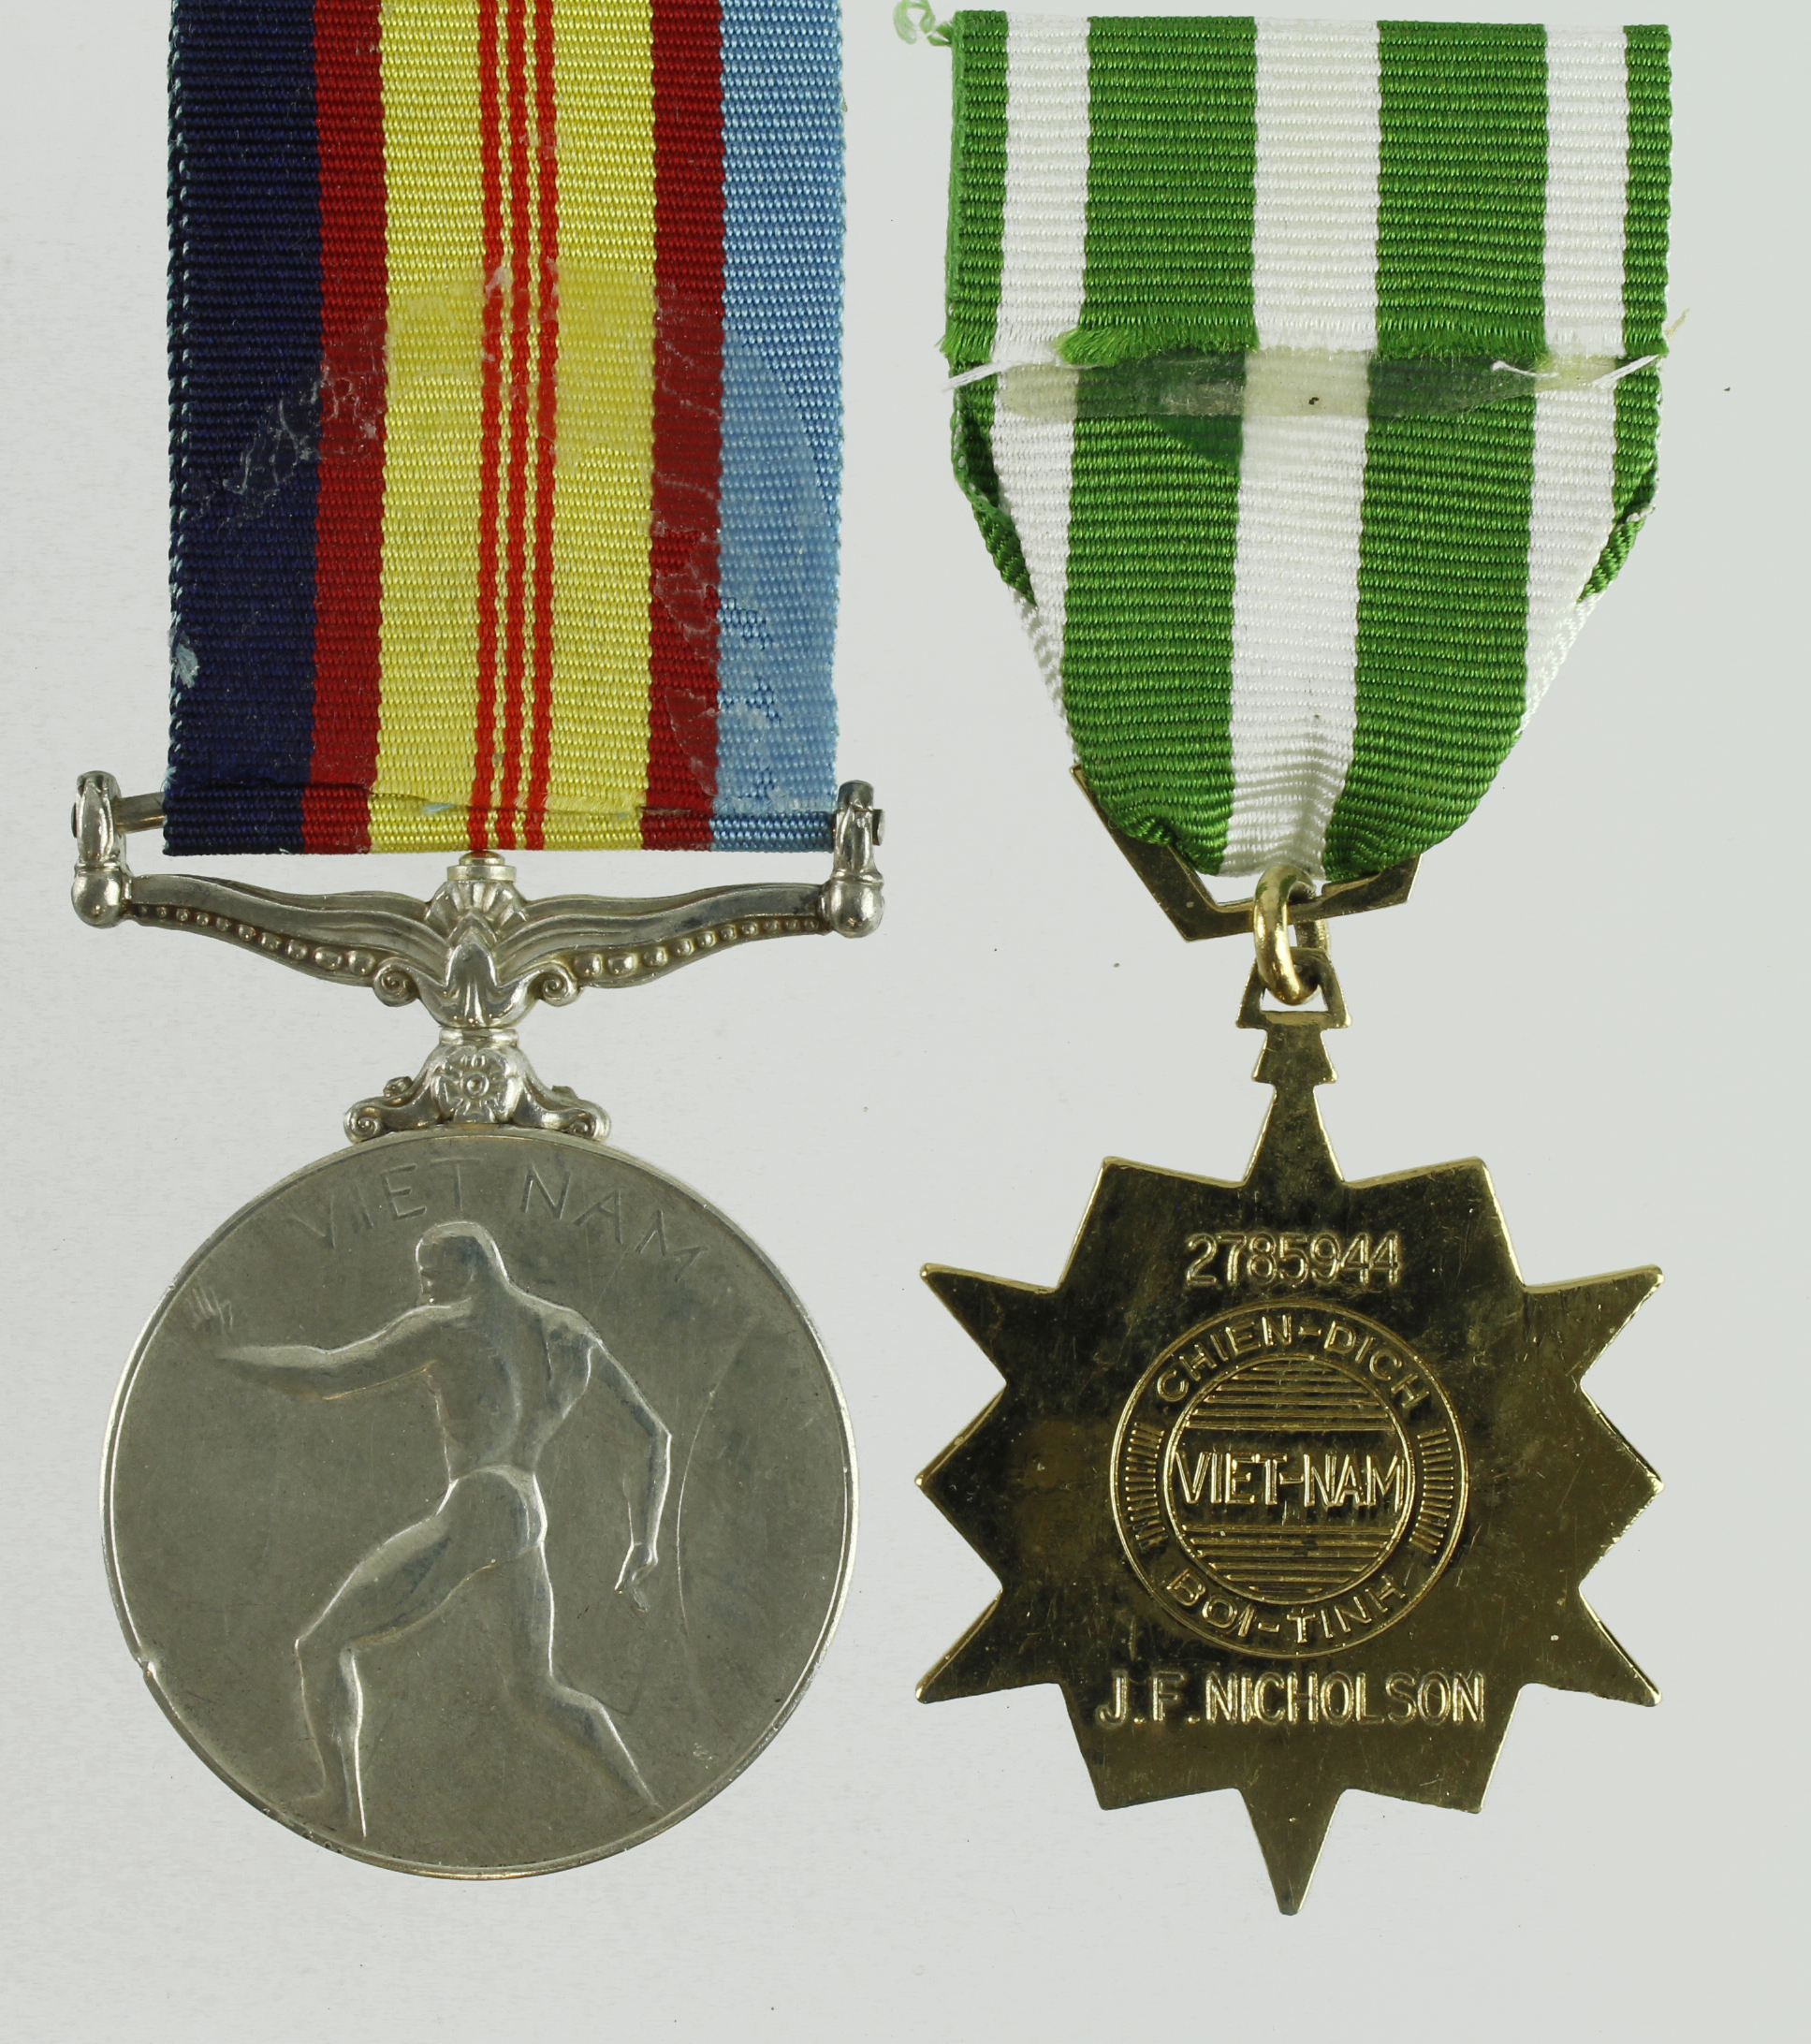 Vietnam Medal 1968 (2785944 J F Nicholson) large capitals, and South Vietnam Campaign Medal with - Bild 2 aus 2